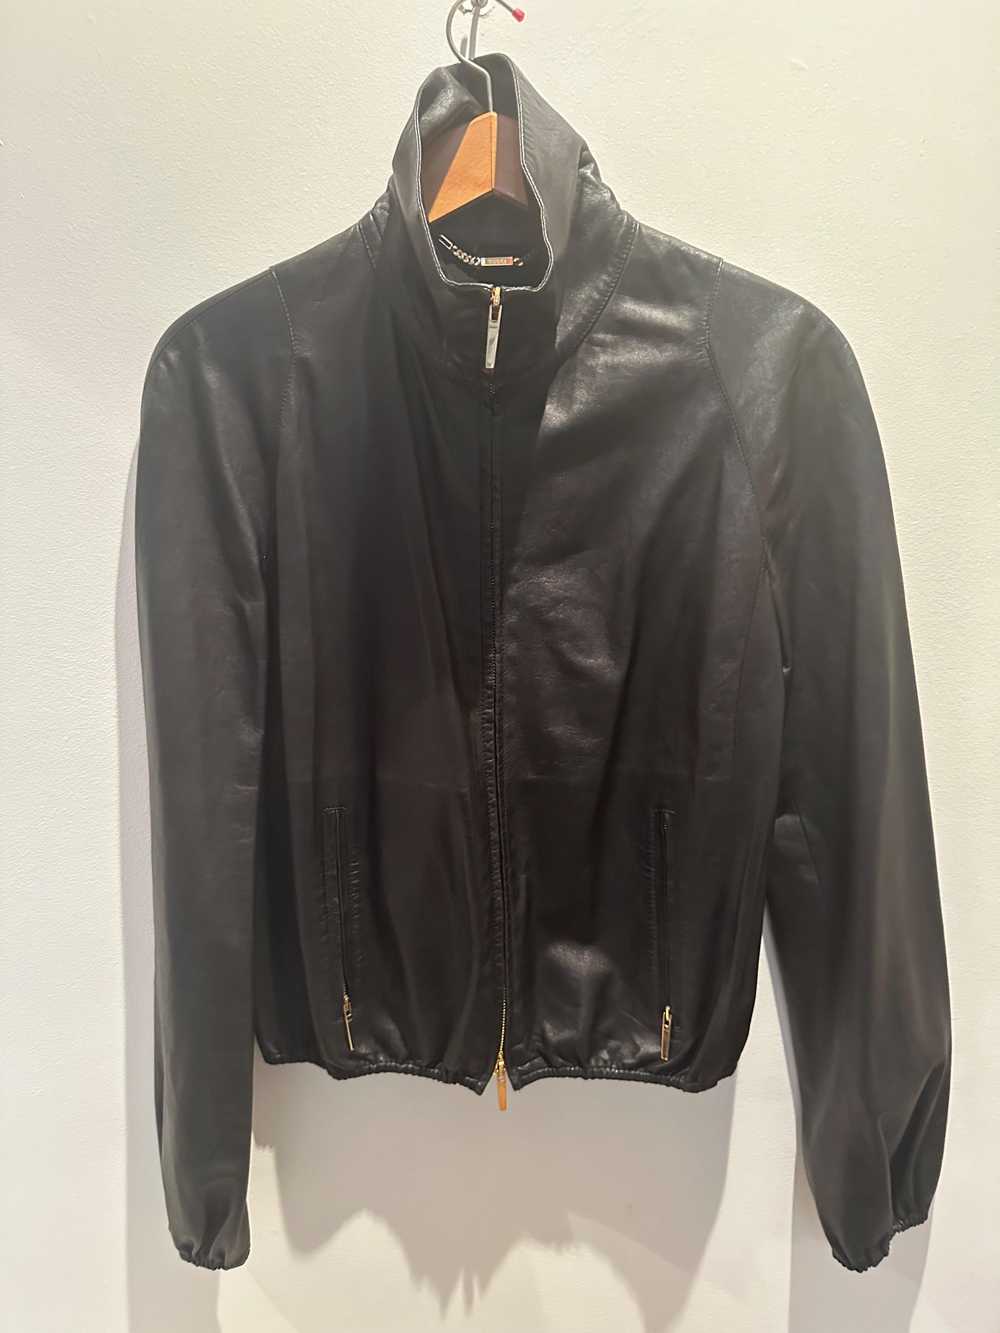 Product Details Gucci Black Leather Bomber Jacket - image 2